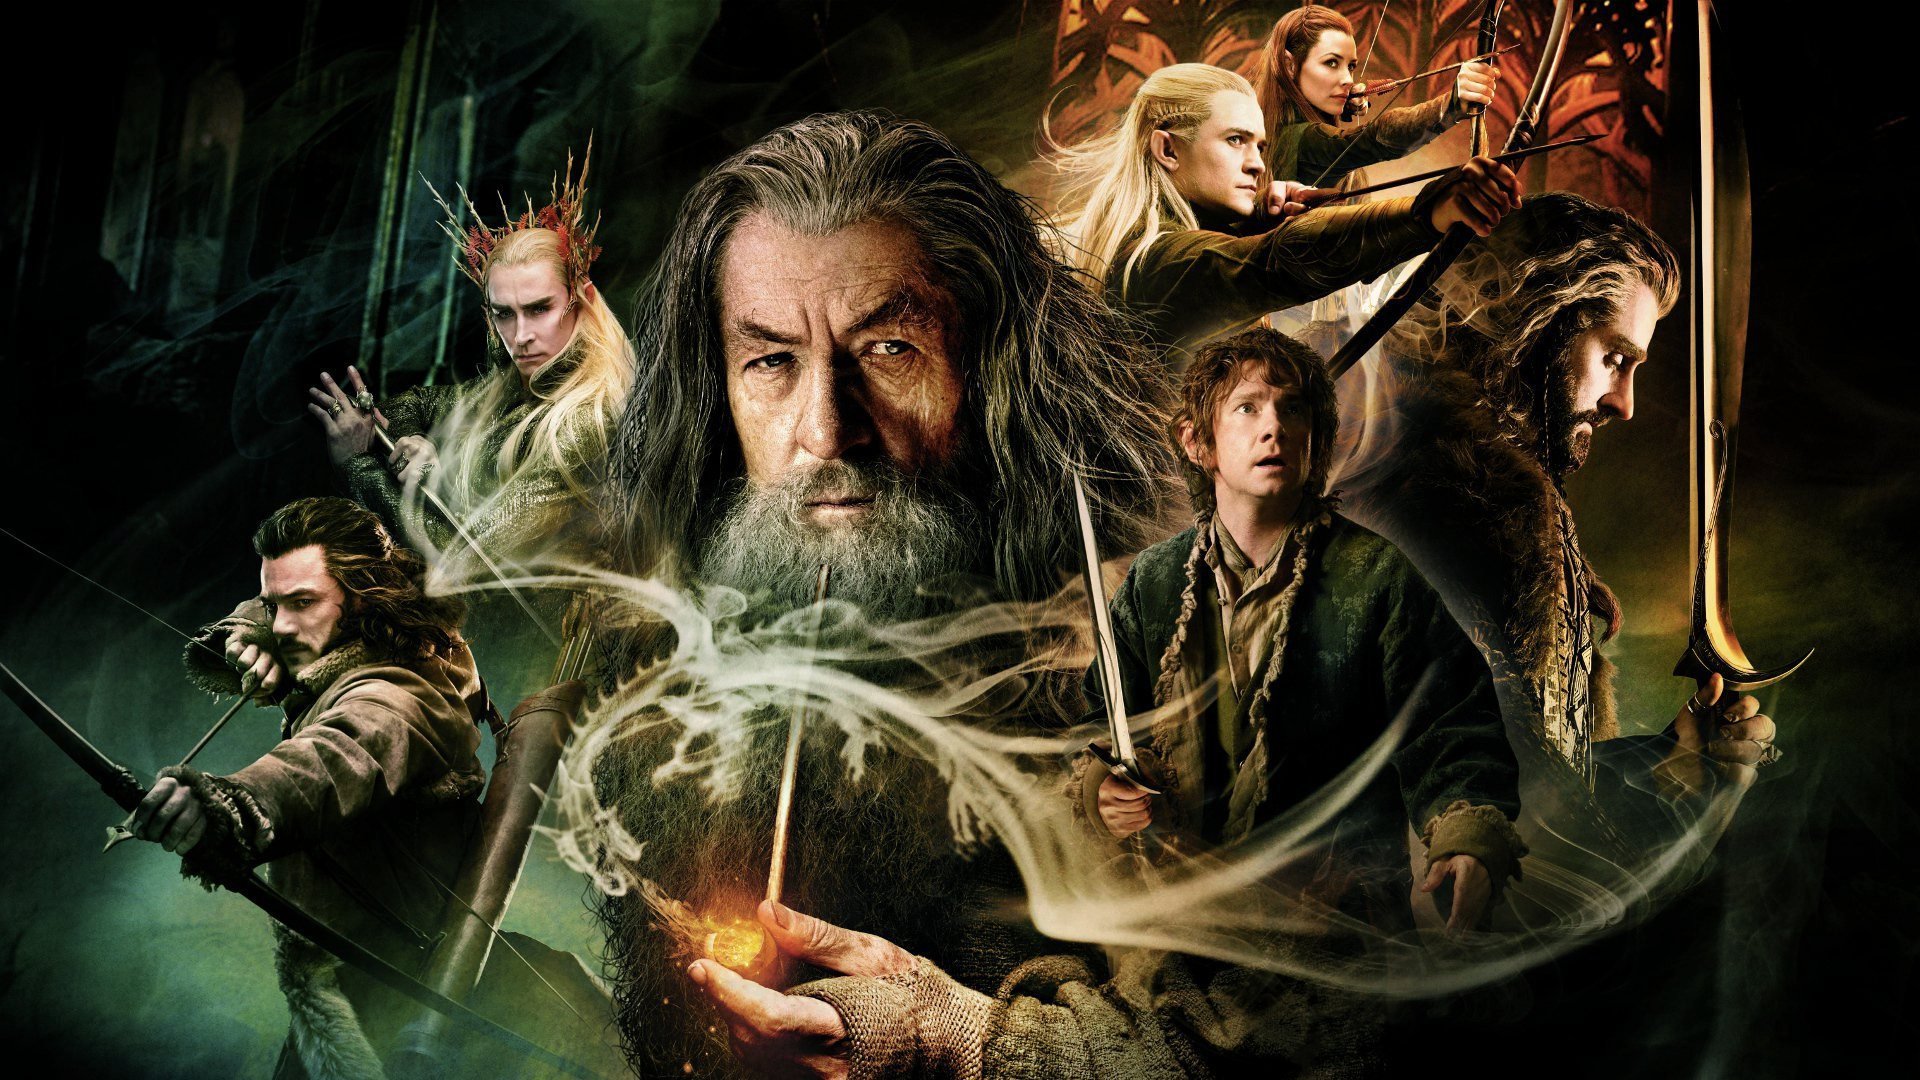 The Hobbit: An Unexpected Journey (Extended Edition) - Movies - Buy/Rent -  Rakuten TV